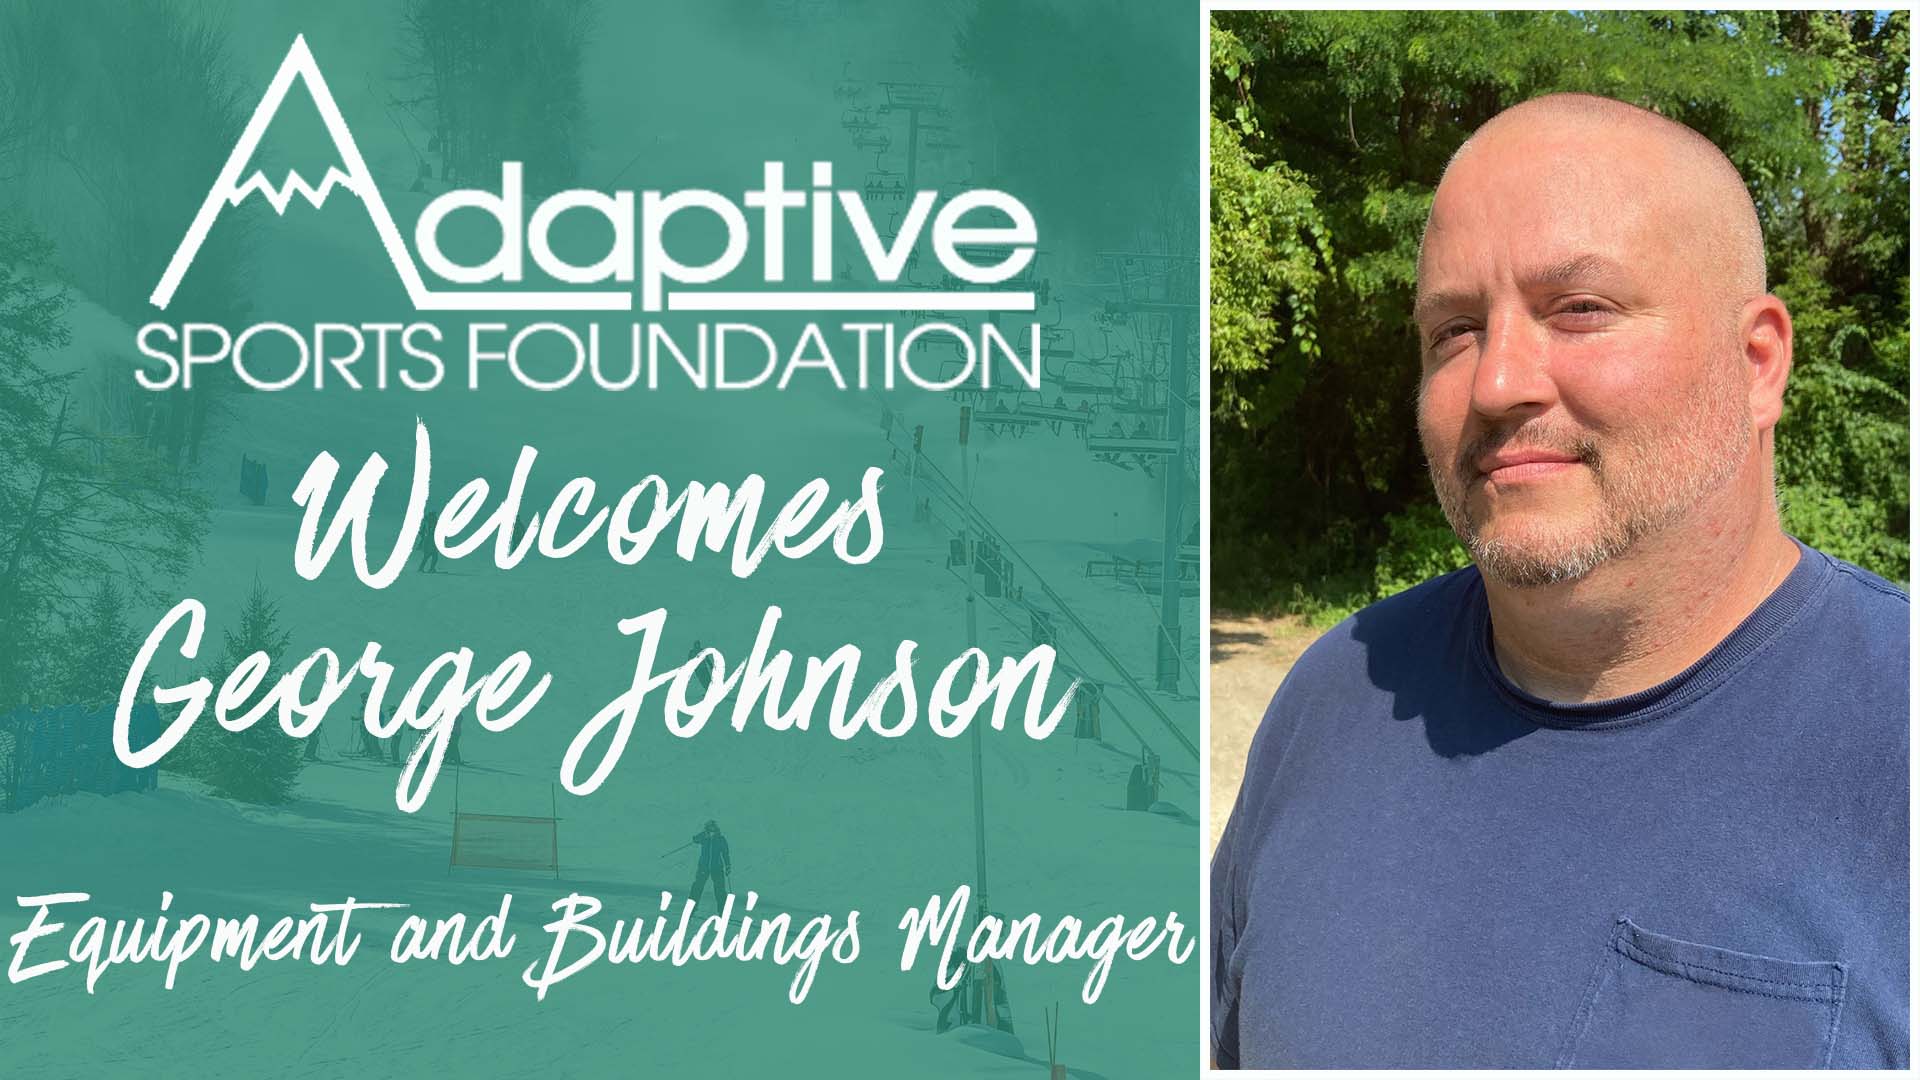 ASF Welcomes George Johnson